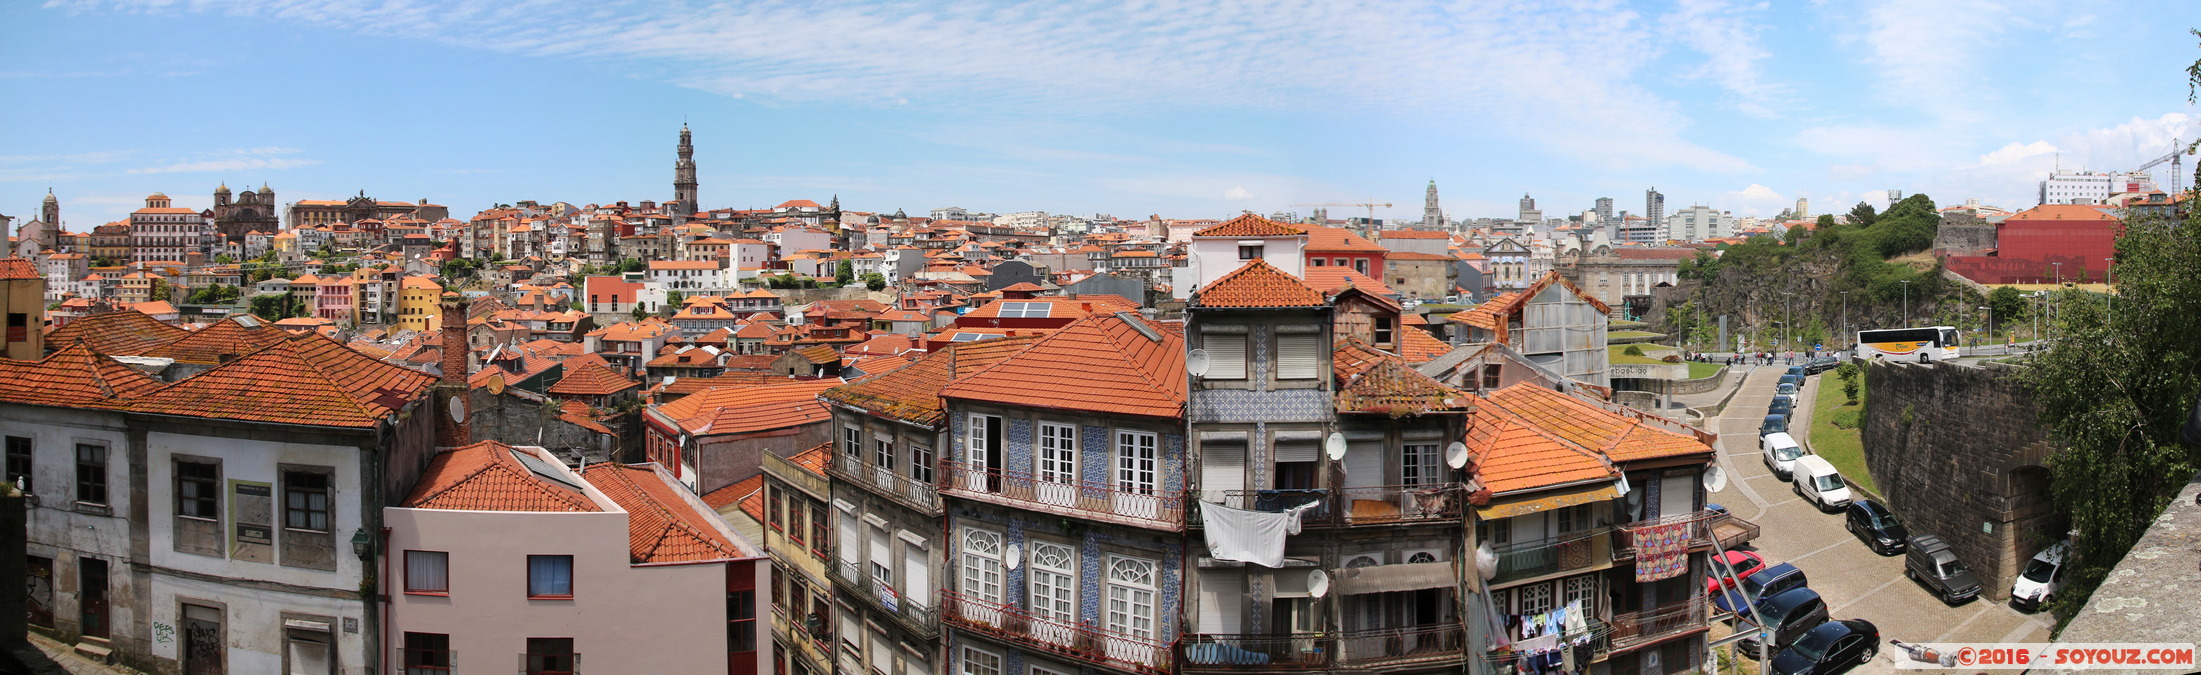 Porto - Bairro Sé - panorama
Mots-clés: geo:lat=41.14304059 geo:lon=-8.61138151 geotagged Porto Portugal PRT S panorama